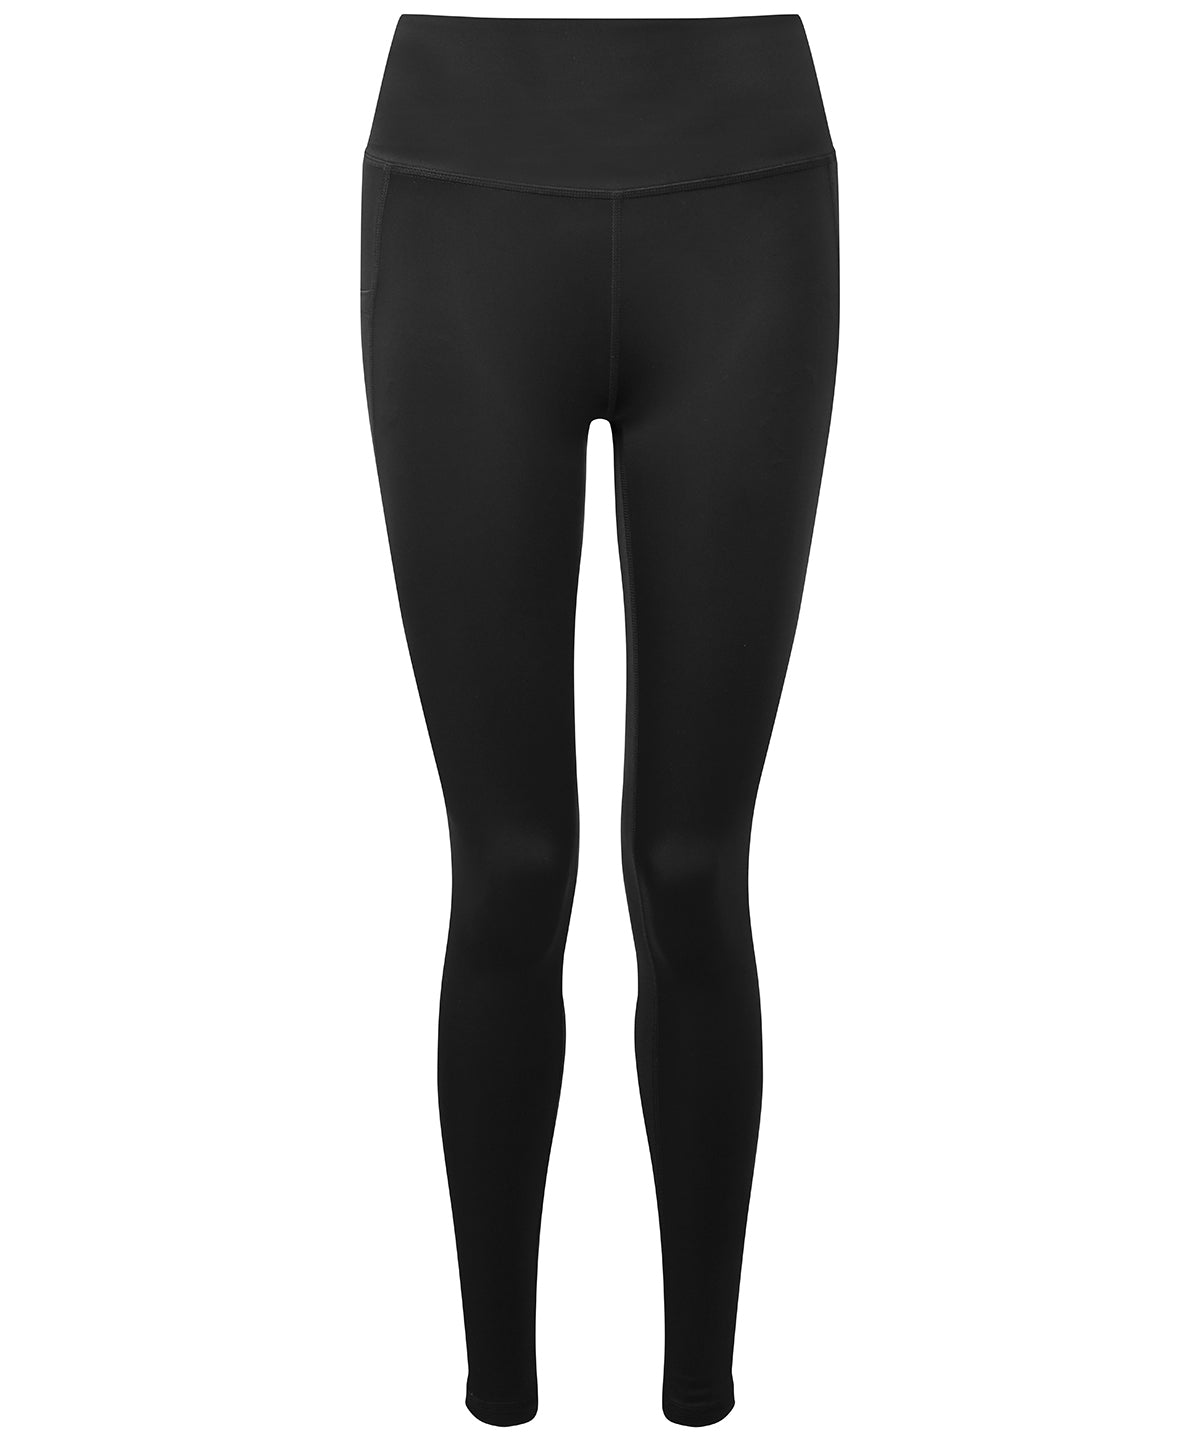 Women's TriDri® high-shine leggings